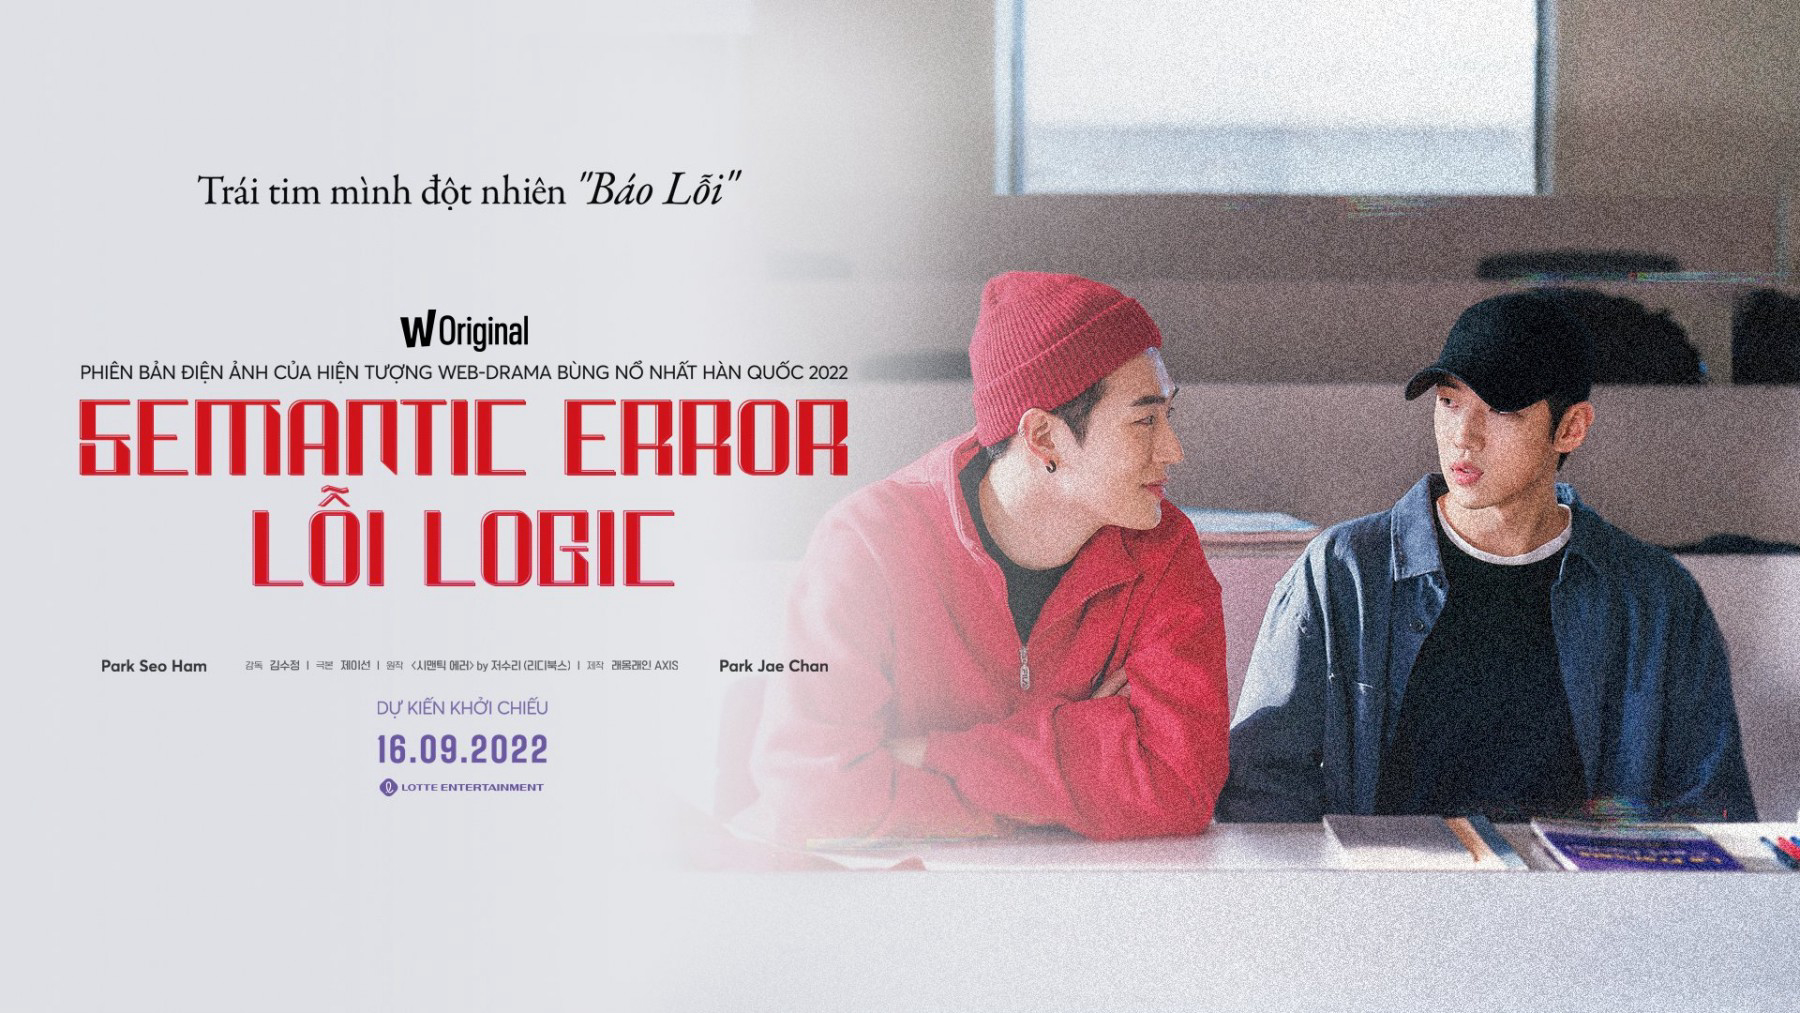 Xem Phim Lỗi Logic, Semantic Error: The Movie 2022